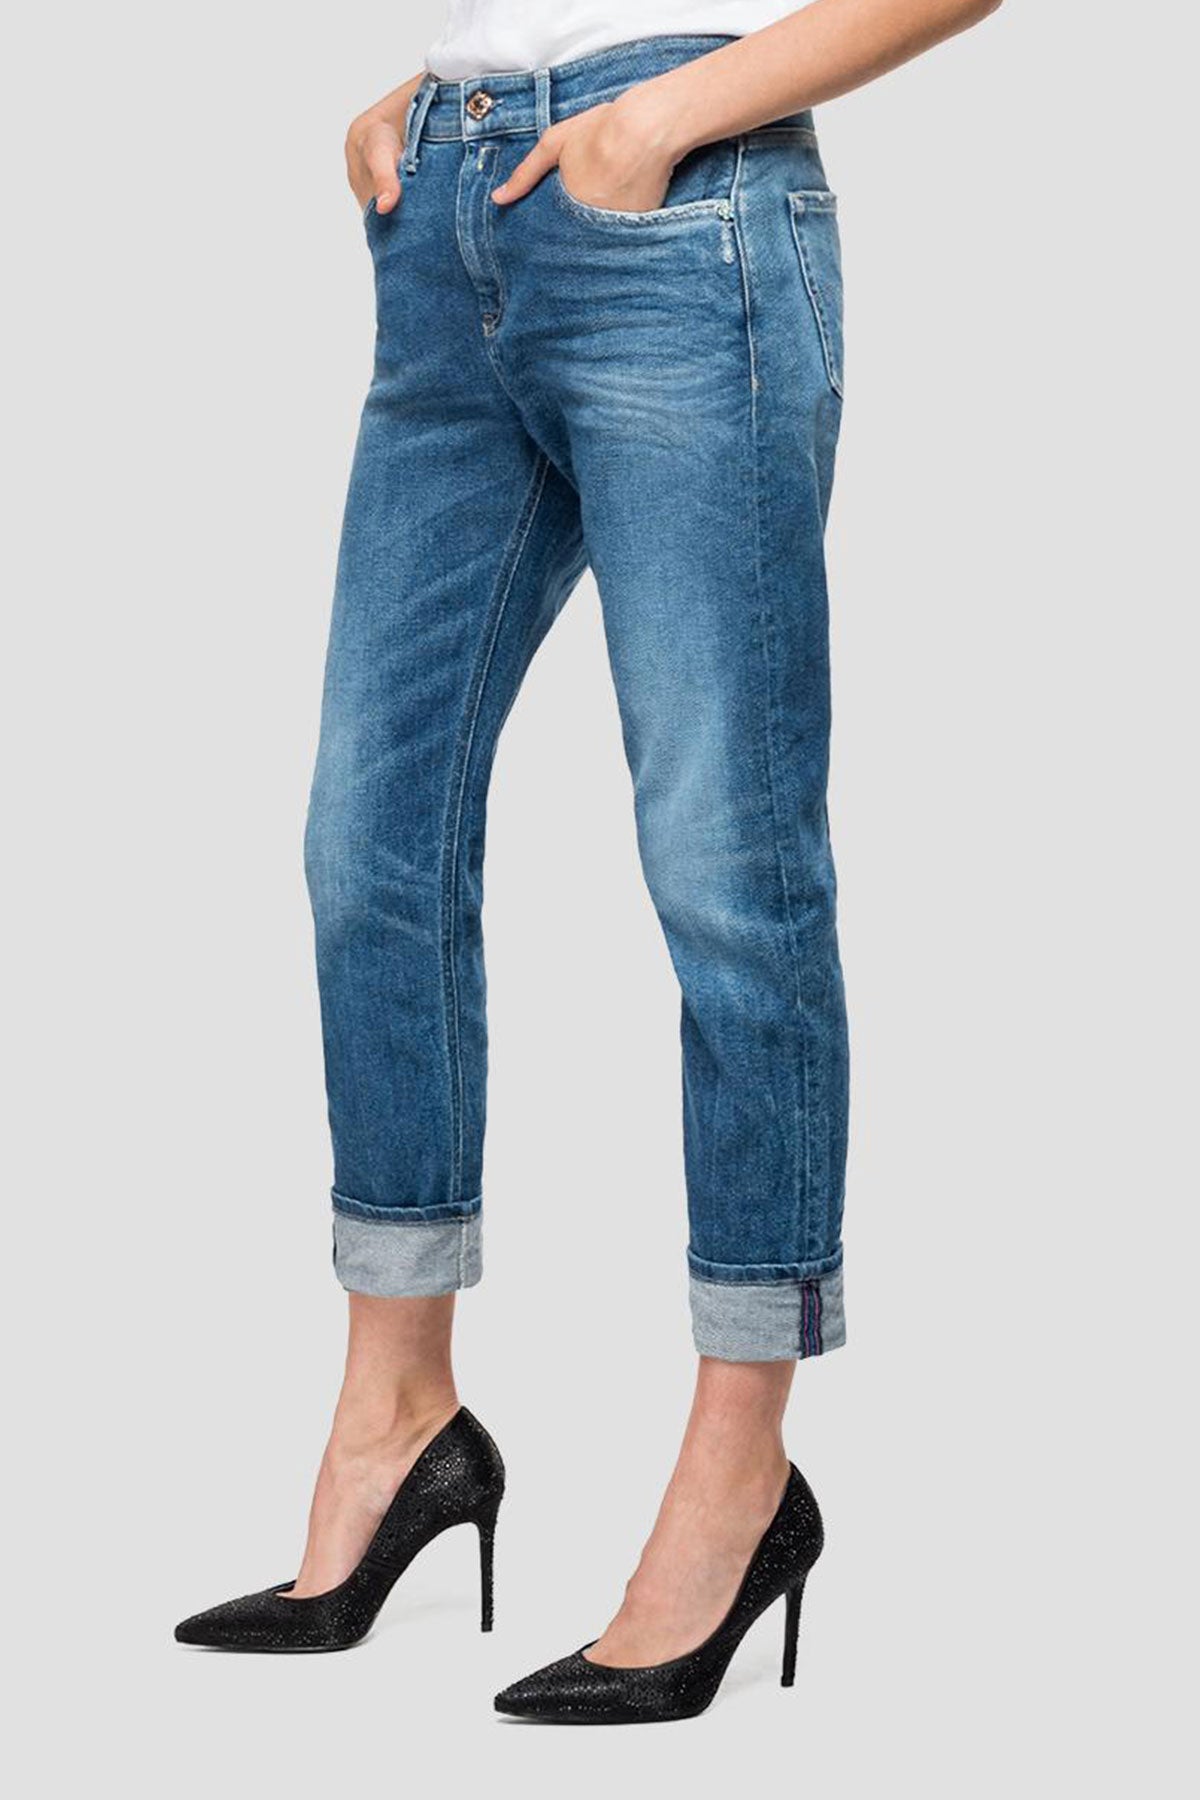 Replay Marty Boyfriend Fit Jeans-Libas Trendy Fashion Store